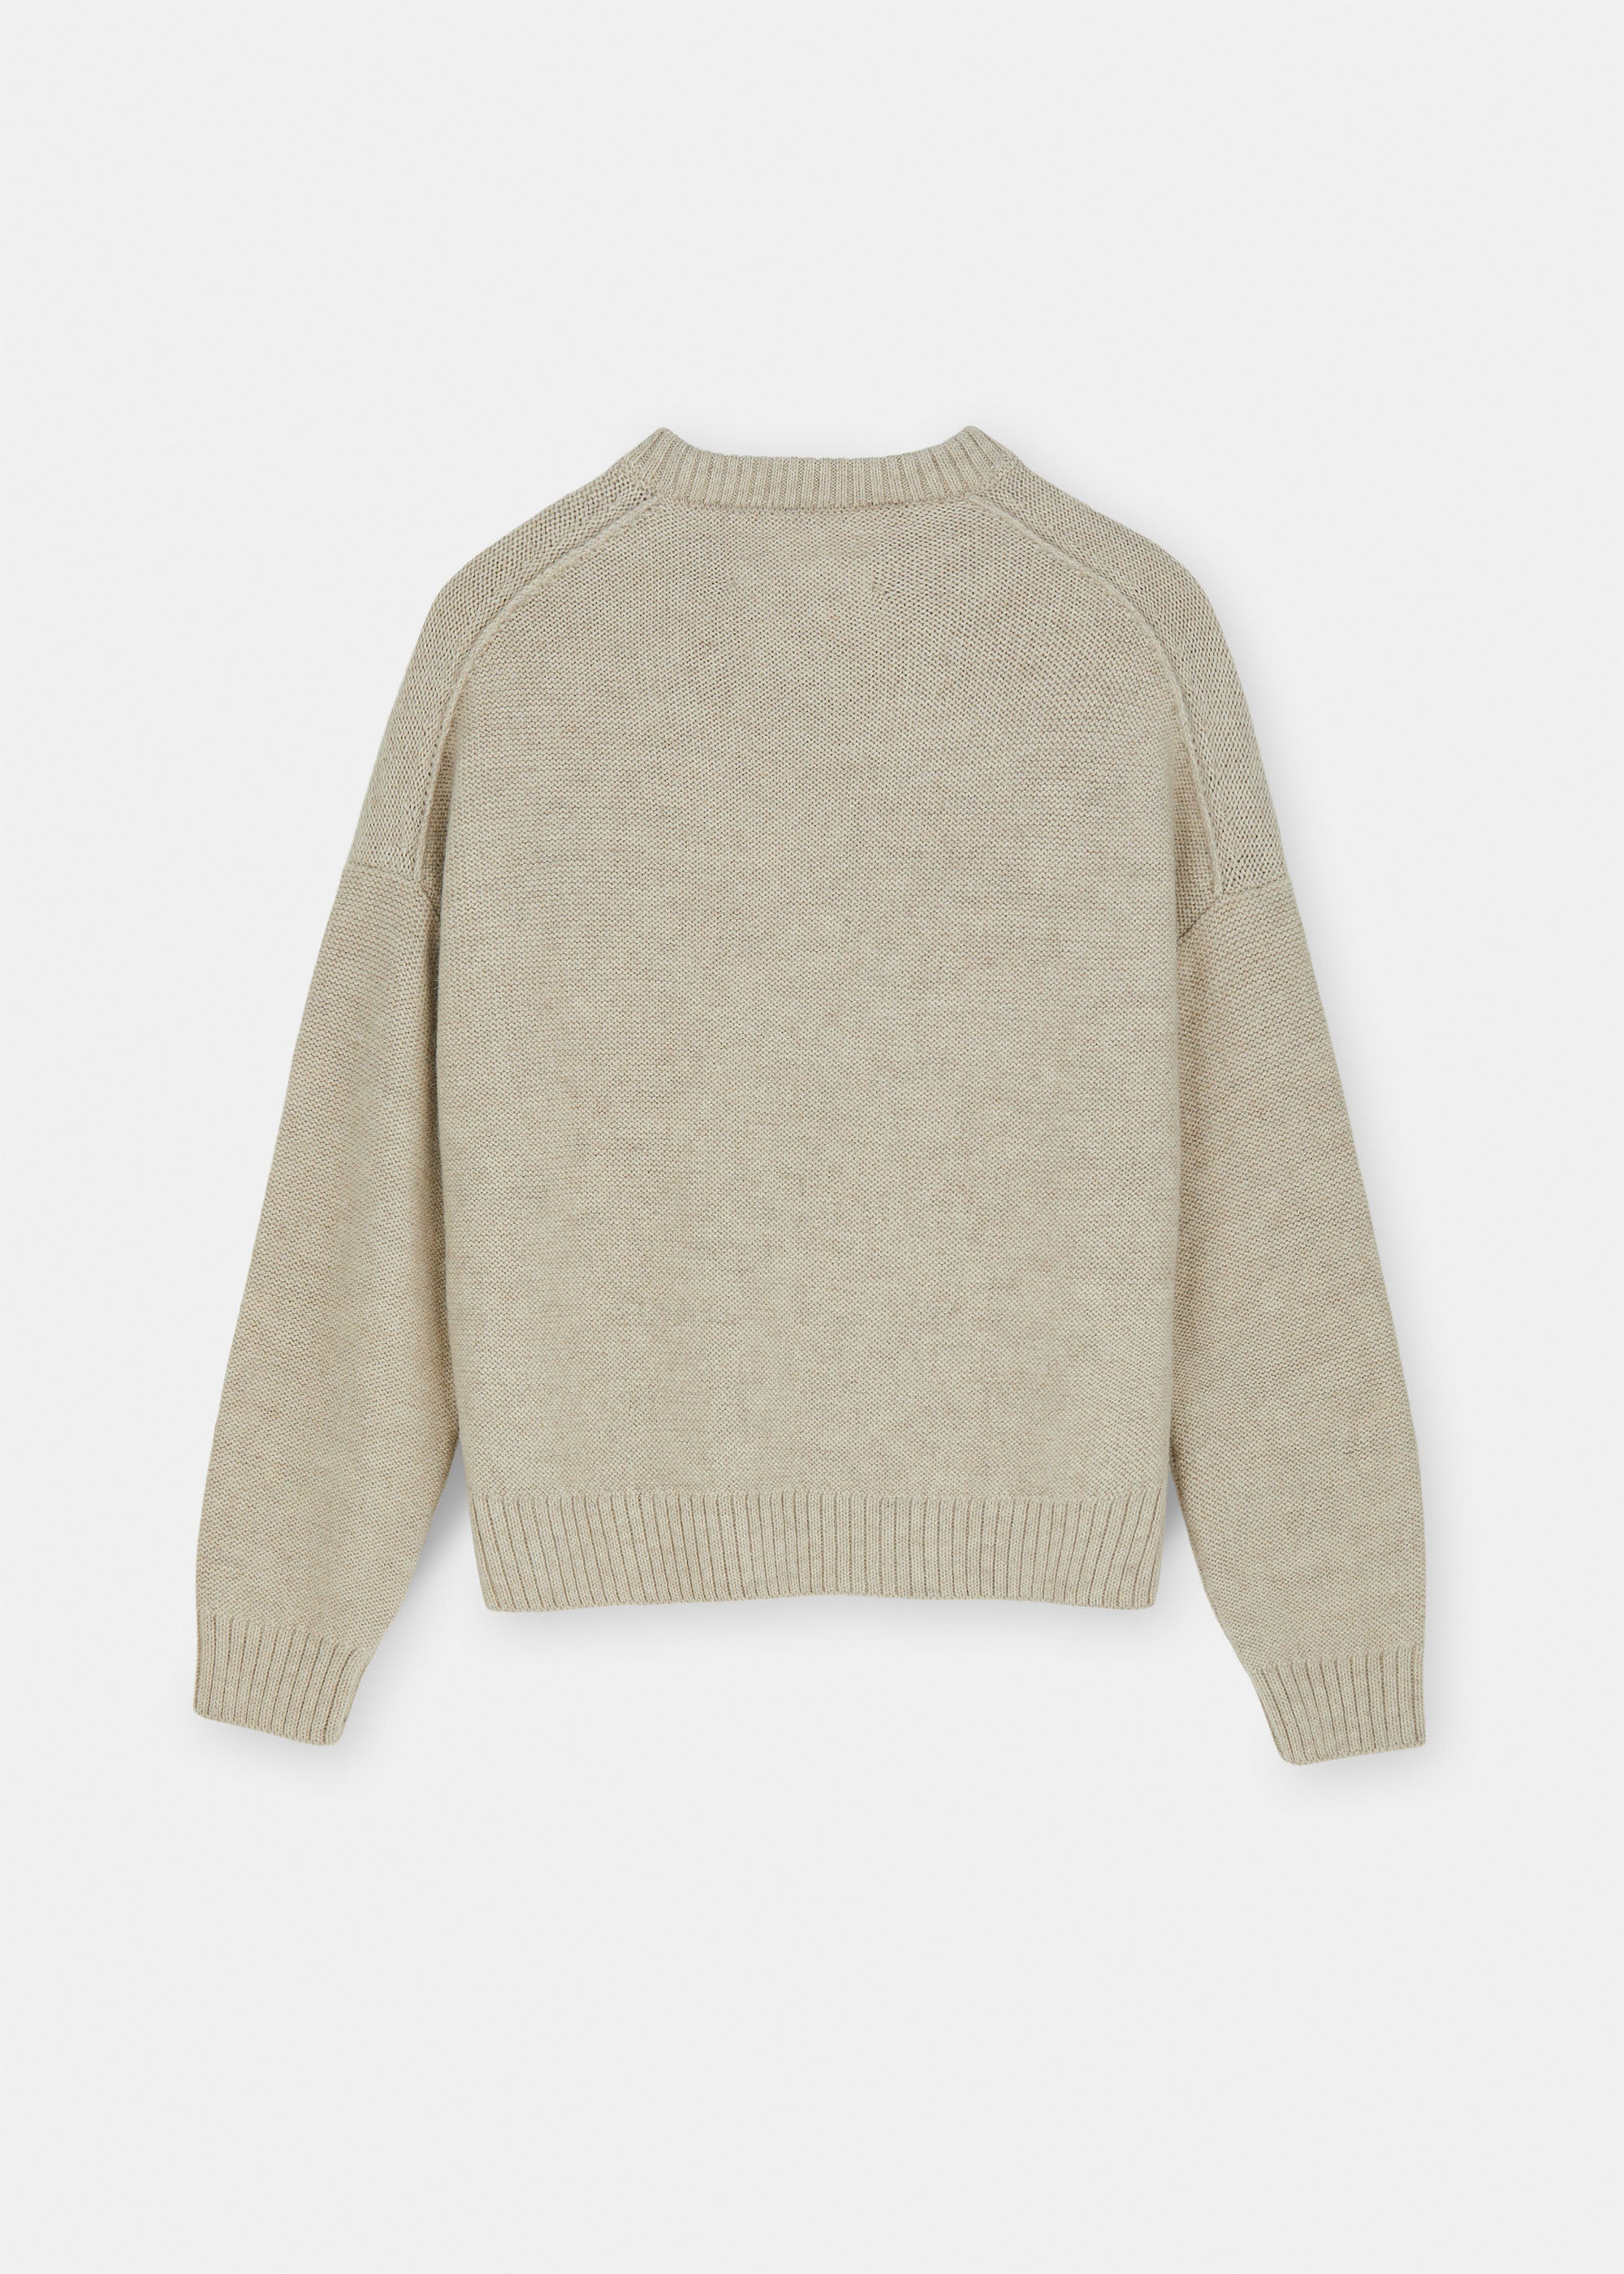 Highland juna wool sweater | Pure Natural